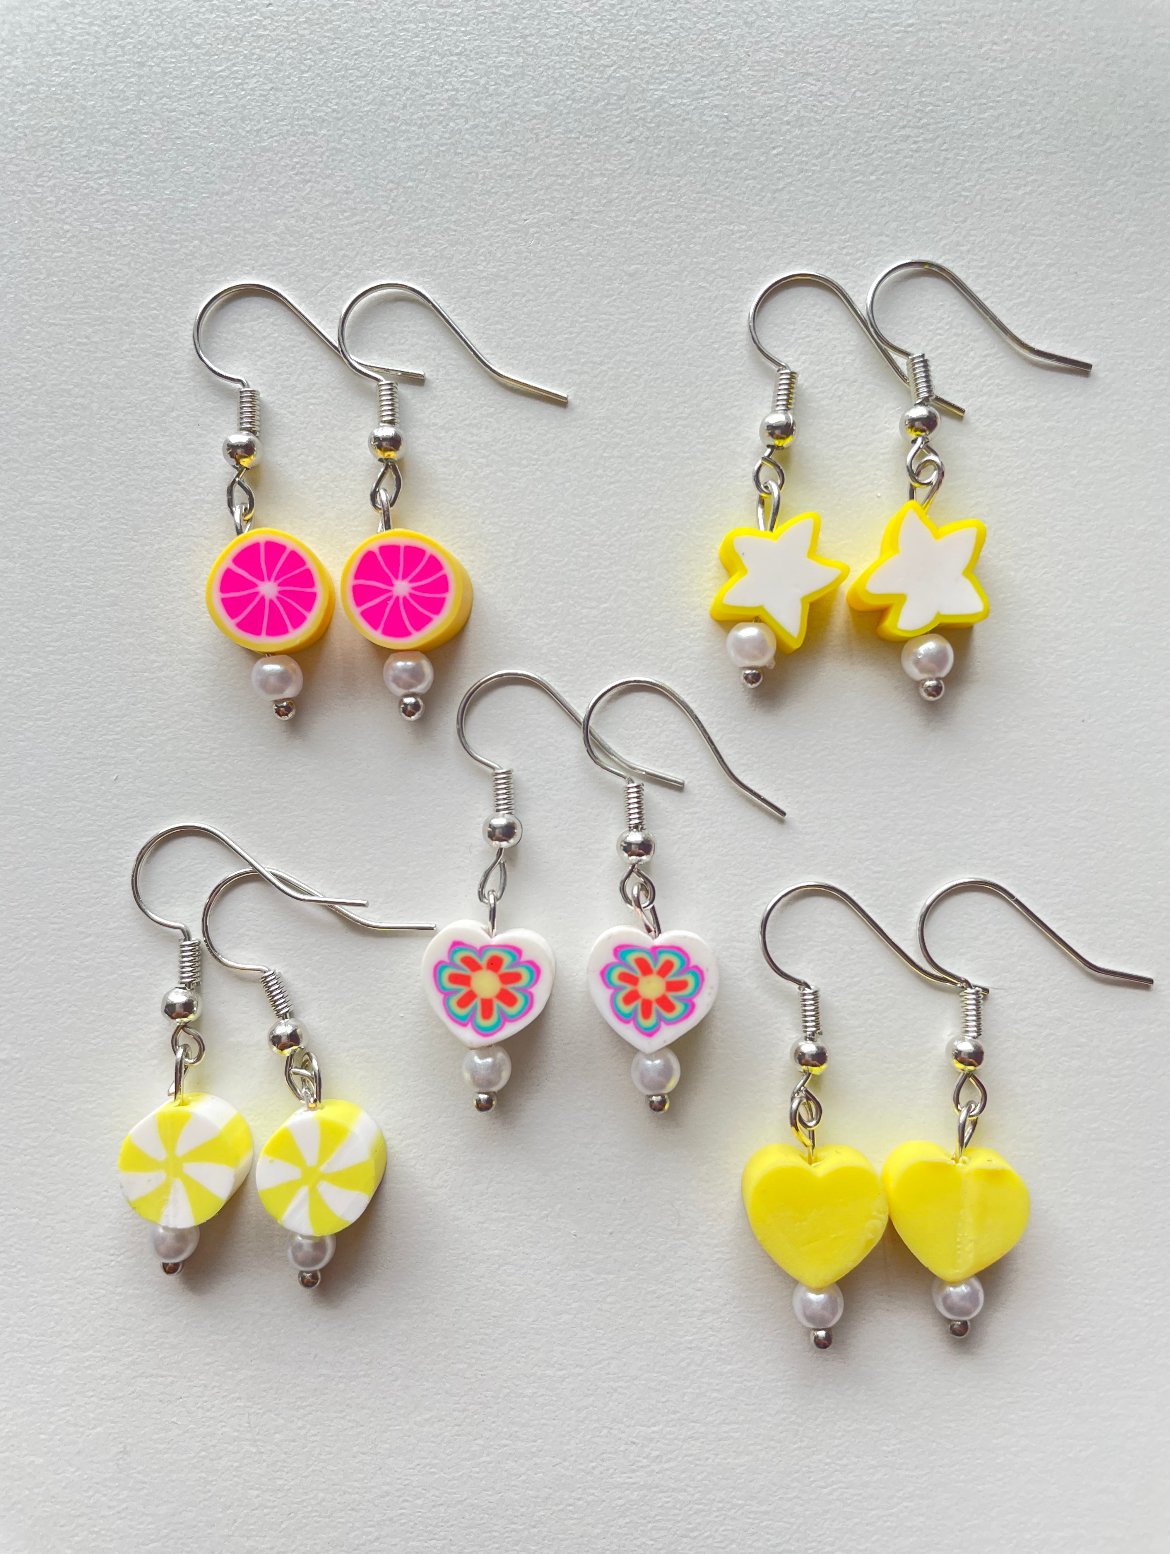 Image of charm earrings